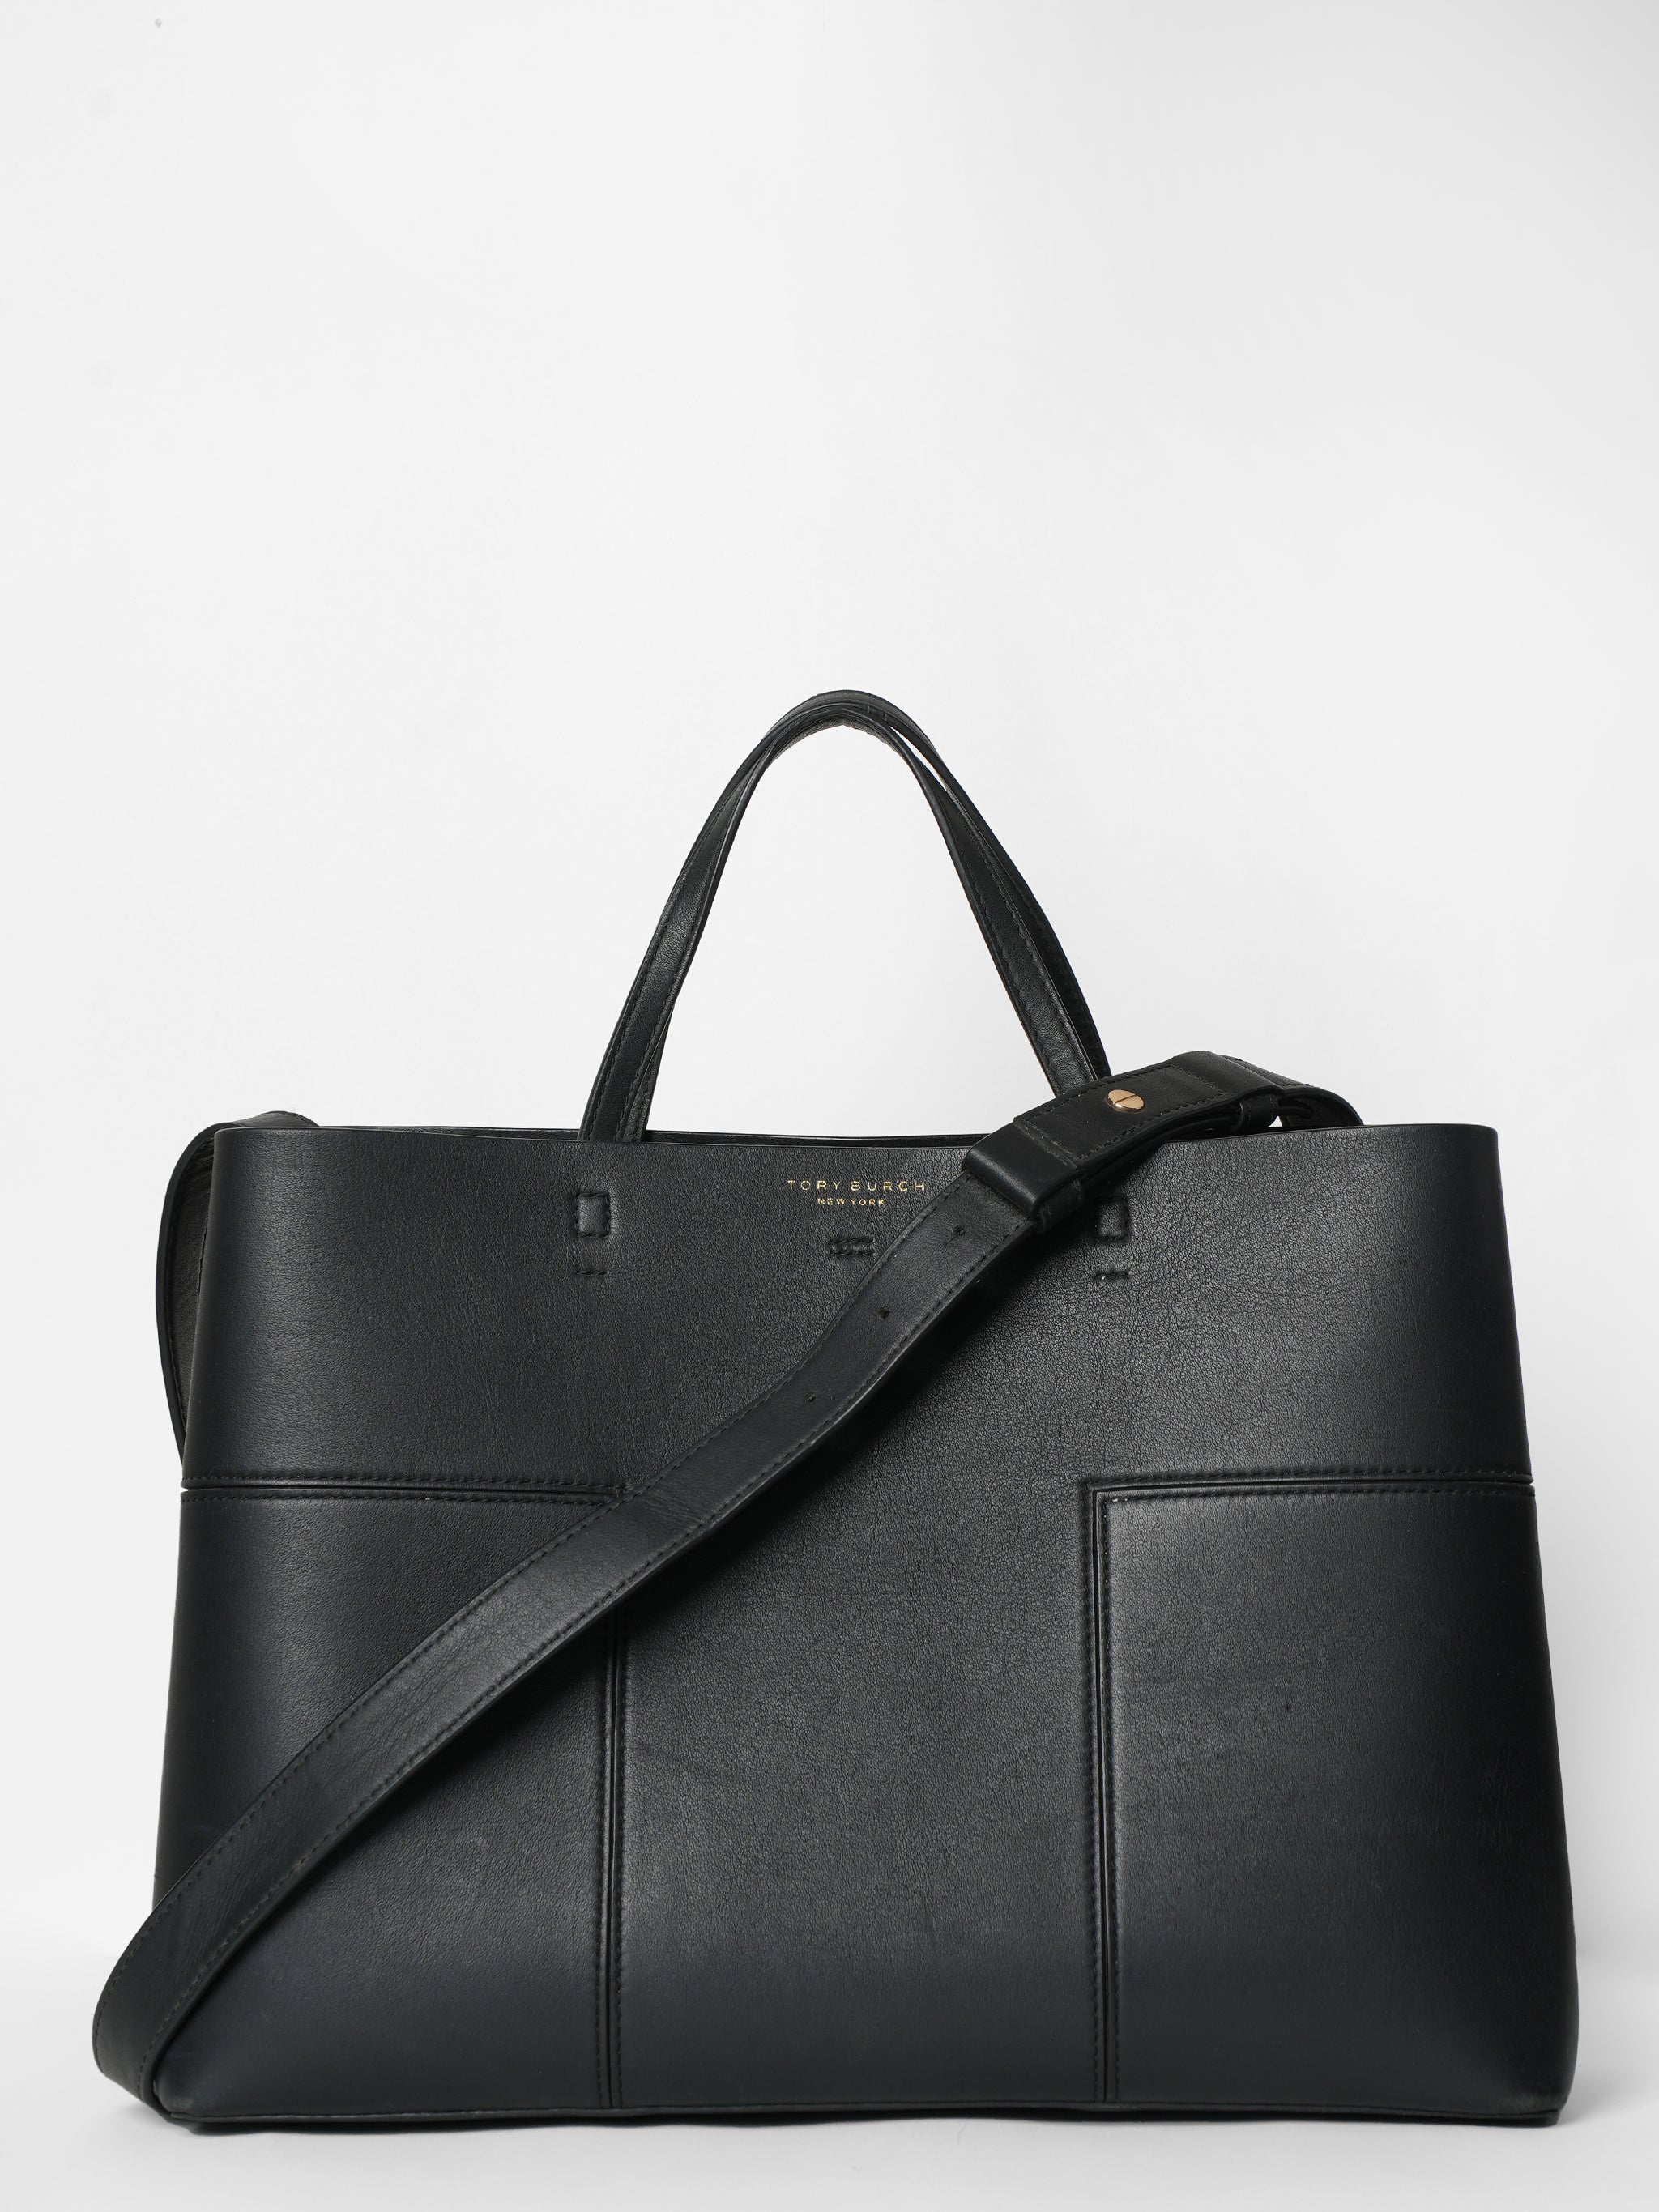 Tory Burch Black Leather Bag